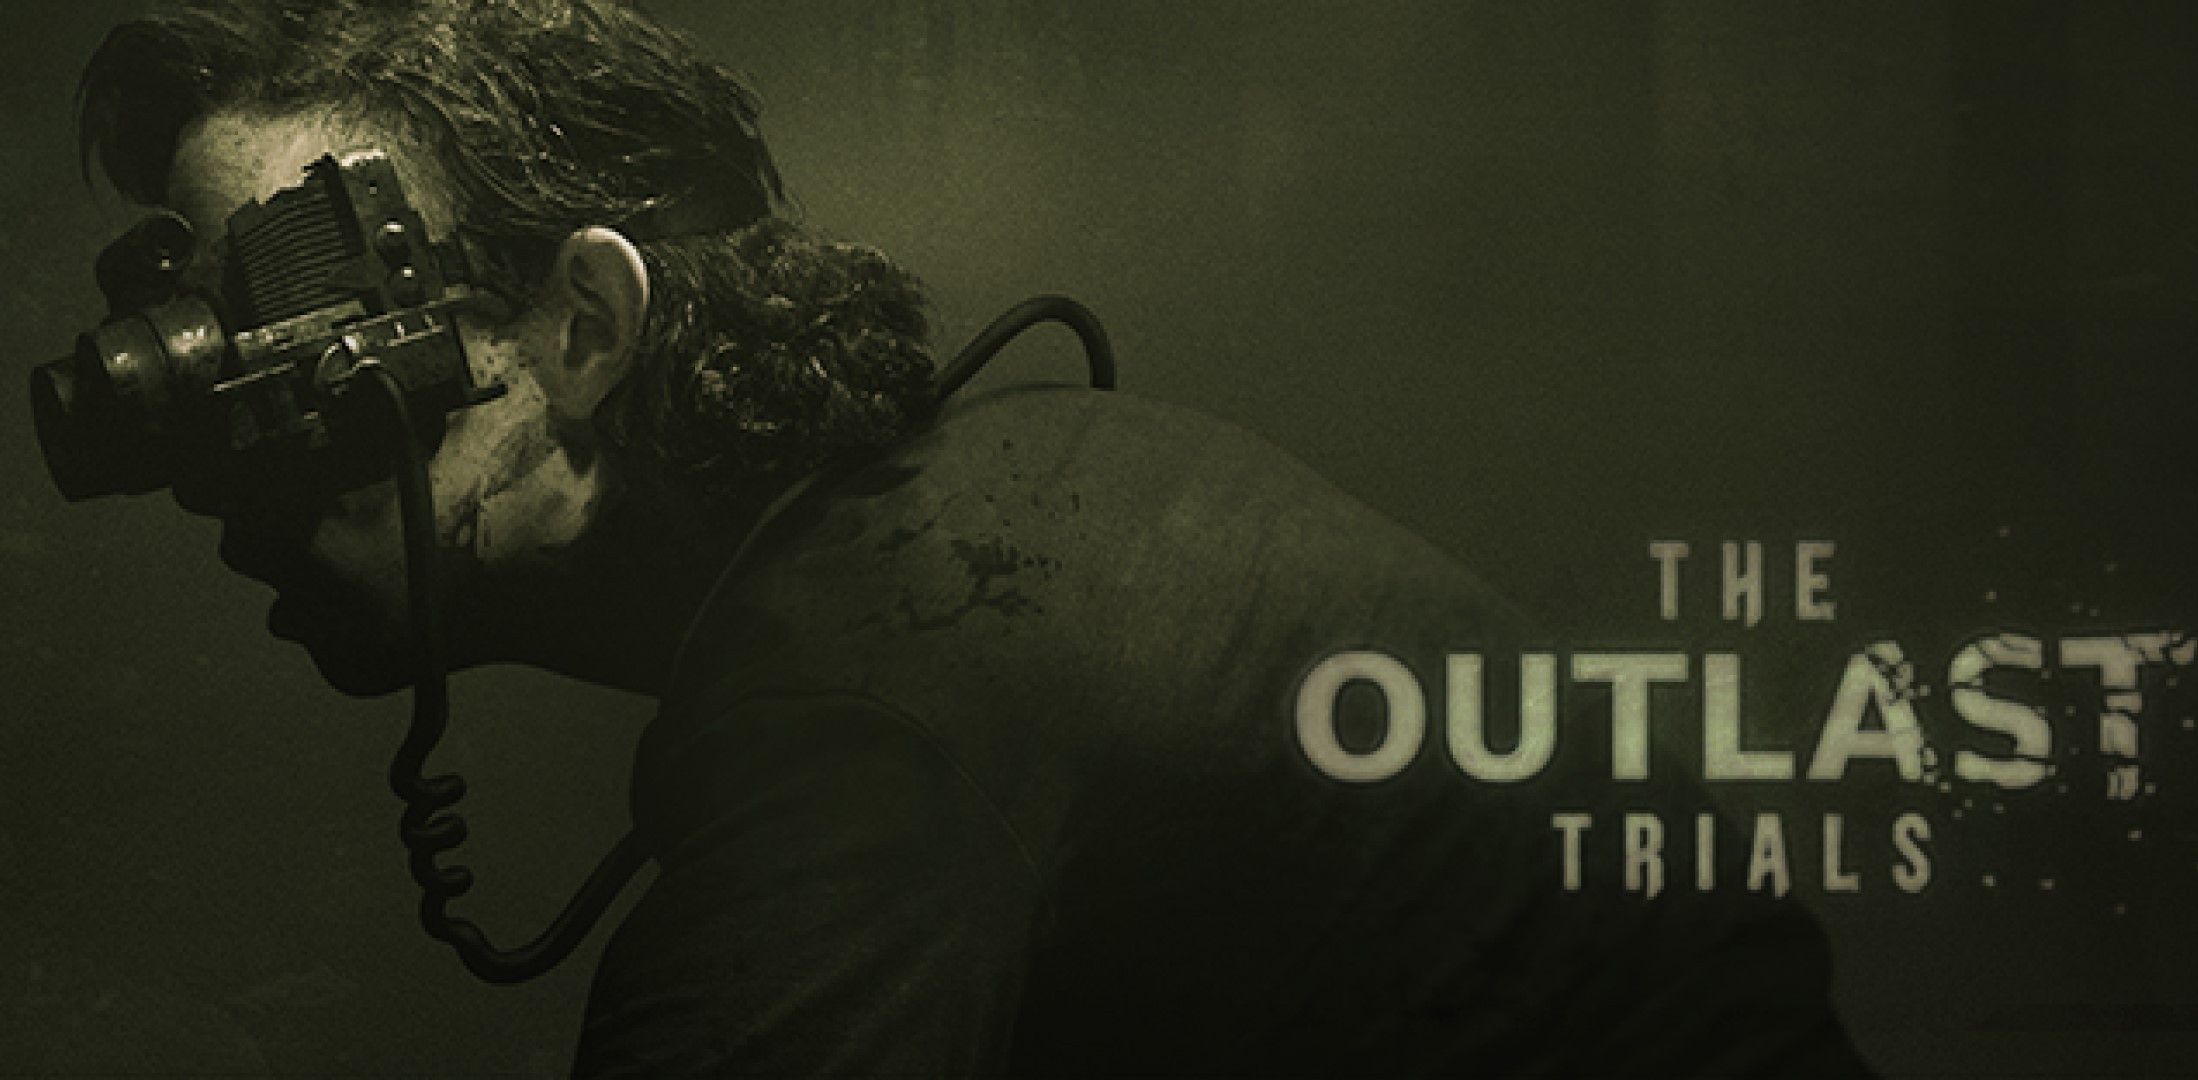 The Outlast Trials gets a teaser trailer